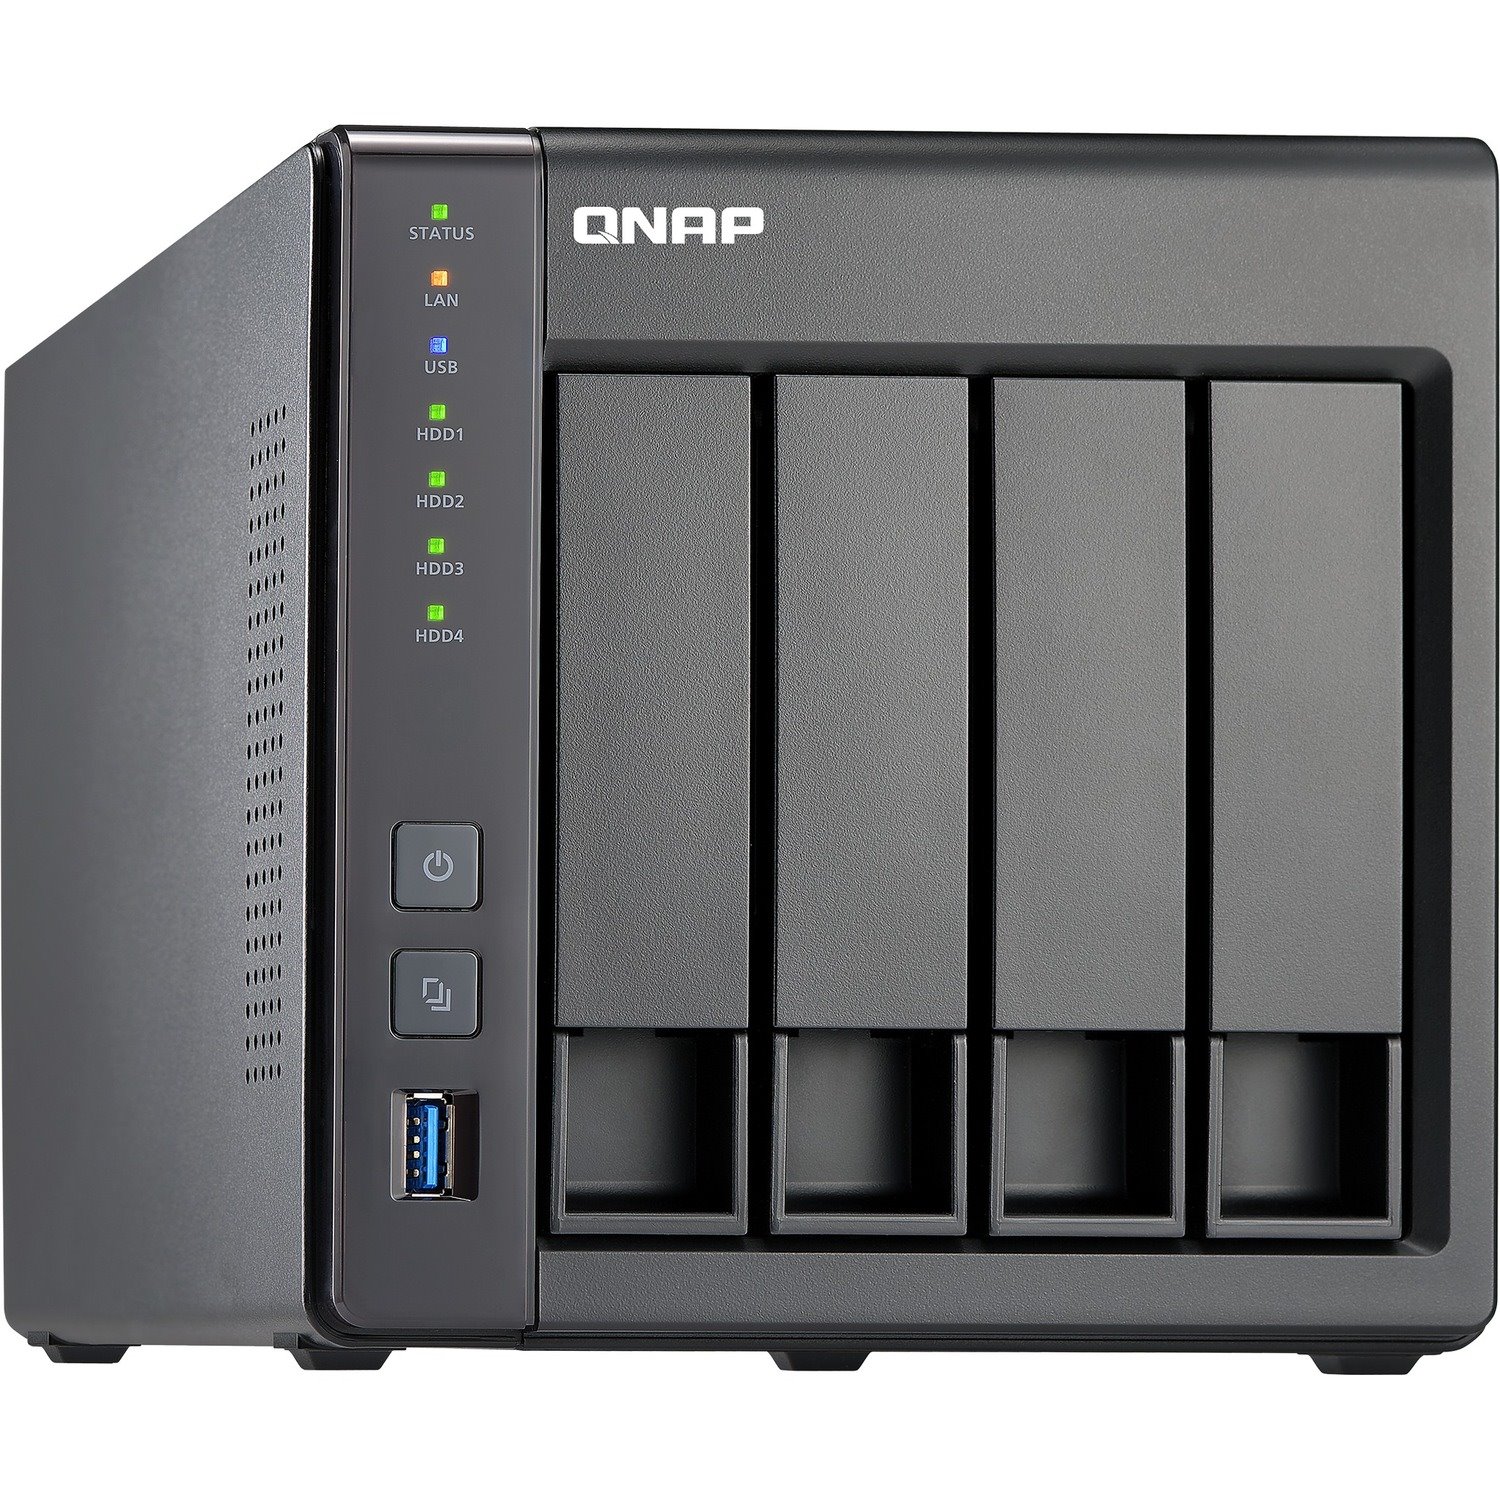 QNAP Turbo NAS TS-451+ 4 x Total Bays NAS Storage System - Intel Celeron 2.41 GHz - 8 GB RAM - DDR3L SDRAM Desktop